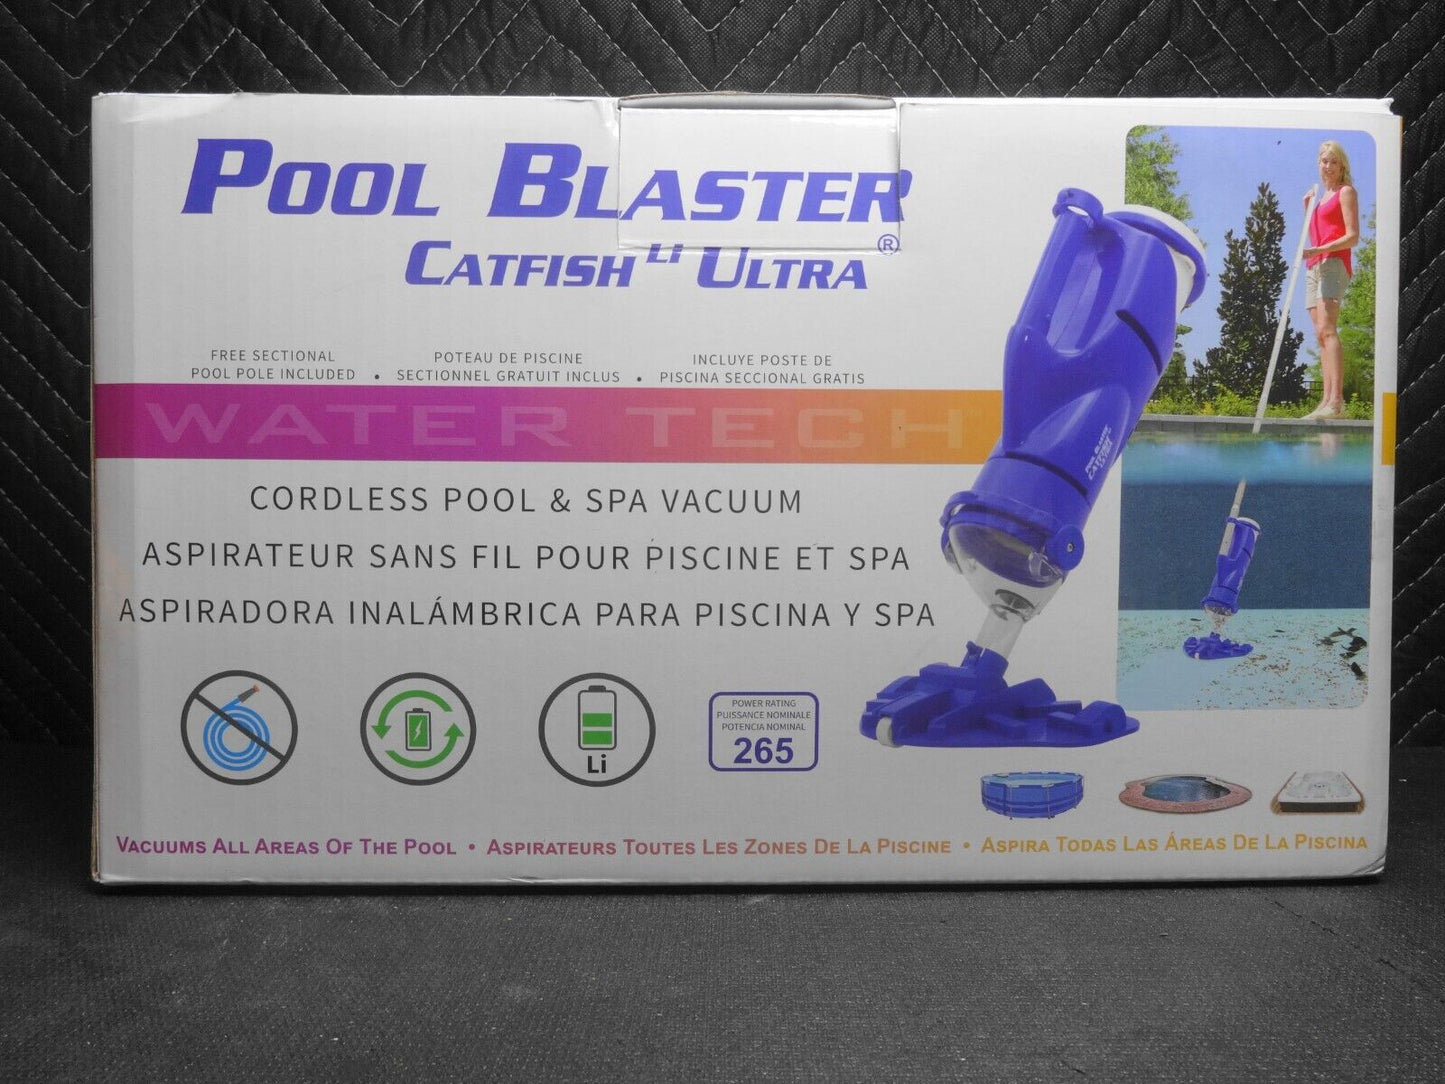 WaterTech Pool Blaster Catfish Li Ultra Cordless Pool & Spa Vacuum (21001DL)